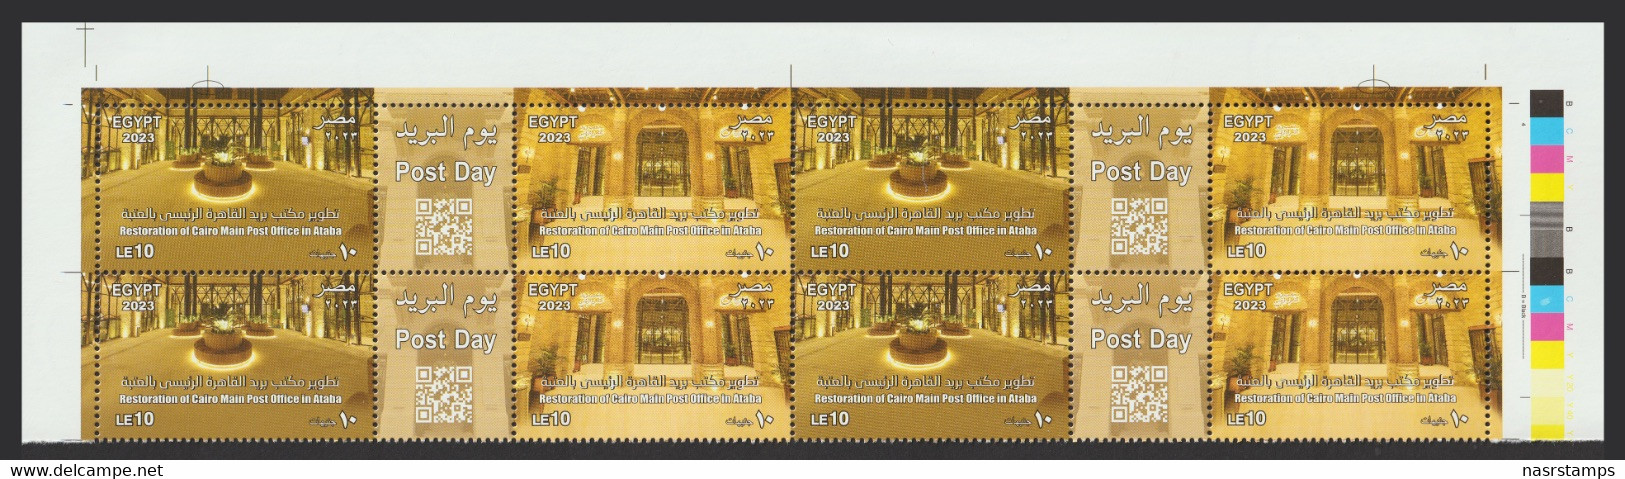 Egypt - 2023 - Block Of 4 - ( Post Day - Restoration Of Cairo Main Post Office In Ataba ) - Ongebruikt